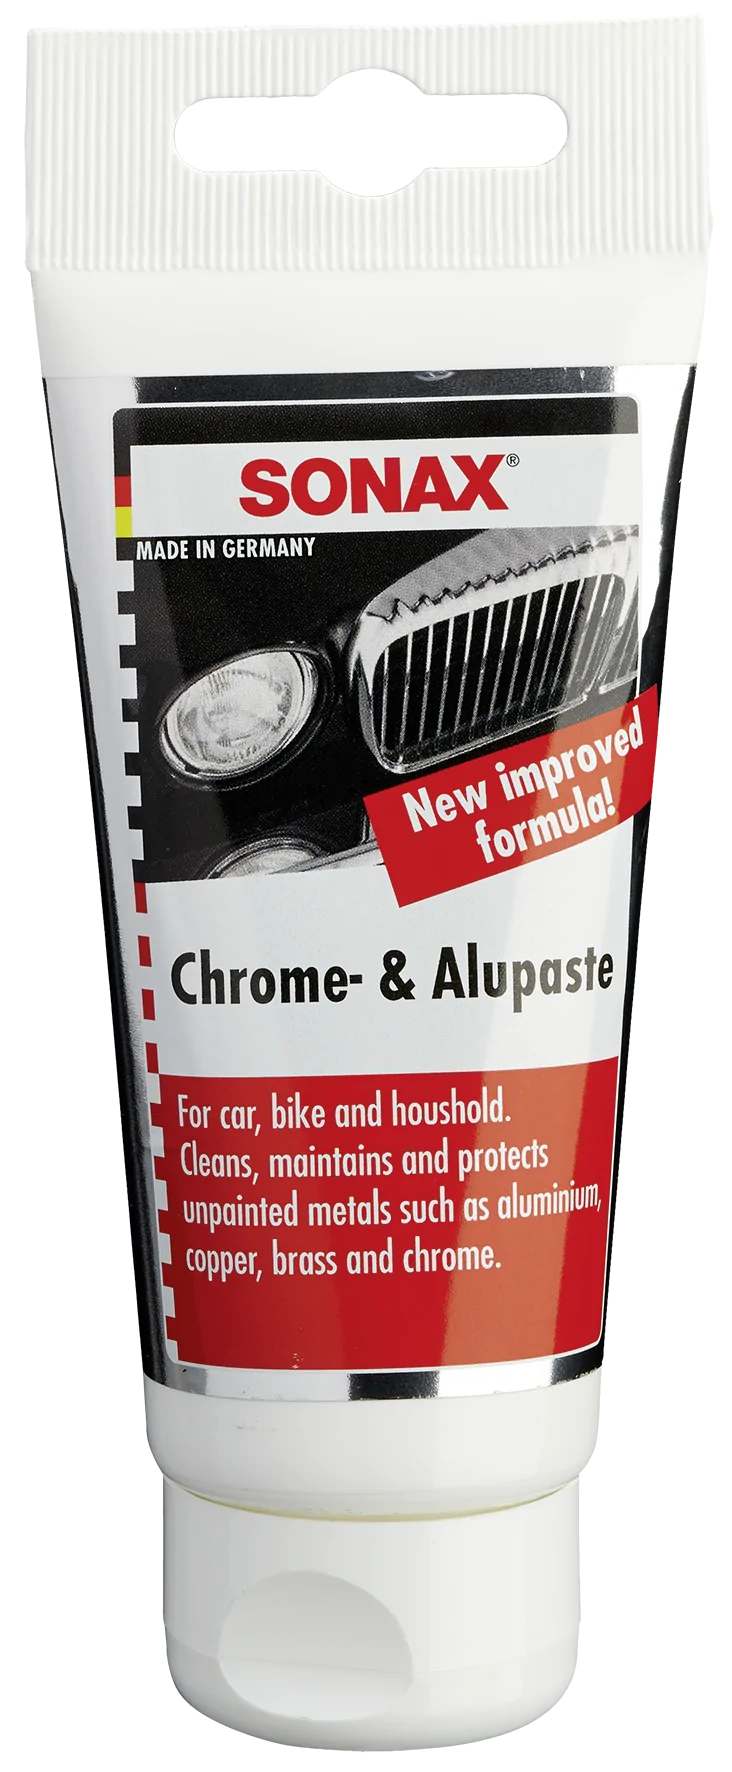 SONAX Chrome & alupaste Паста для хрома и алюминия